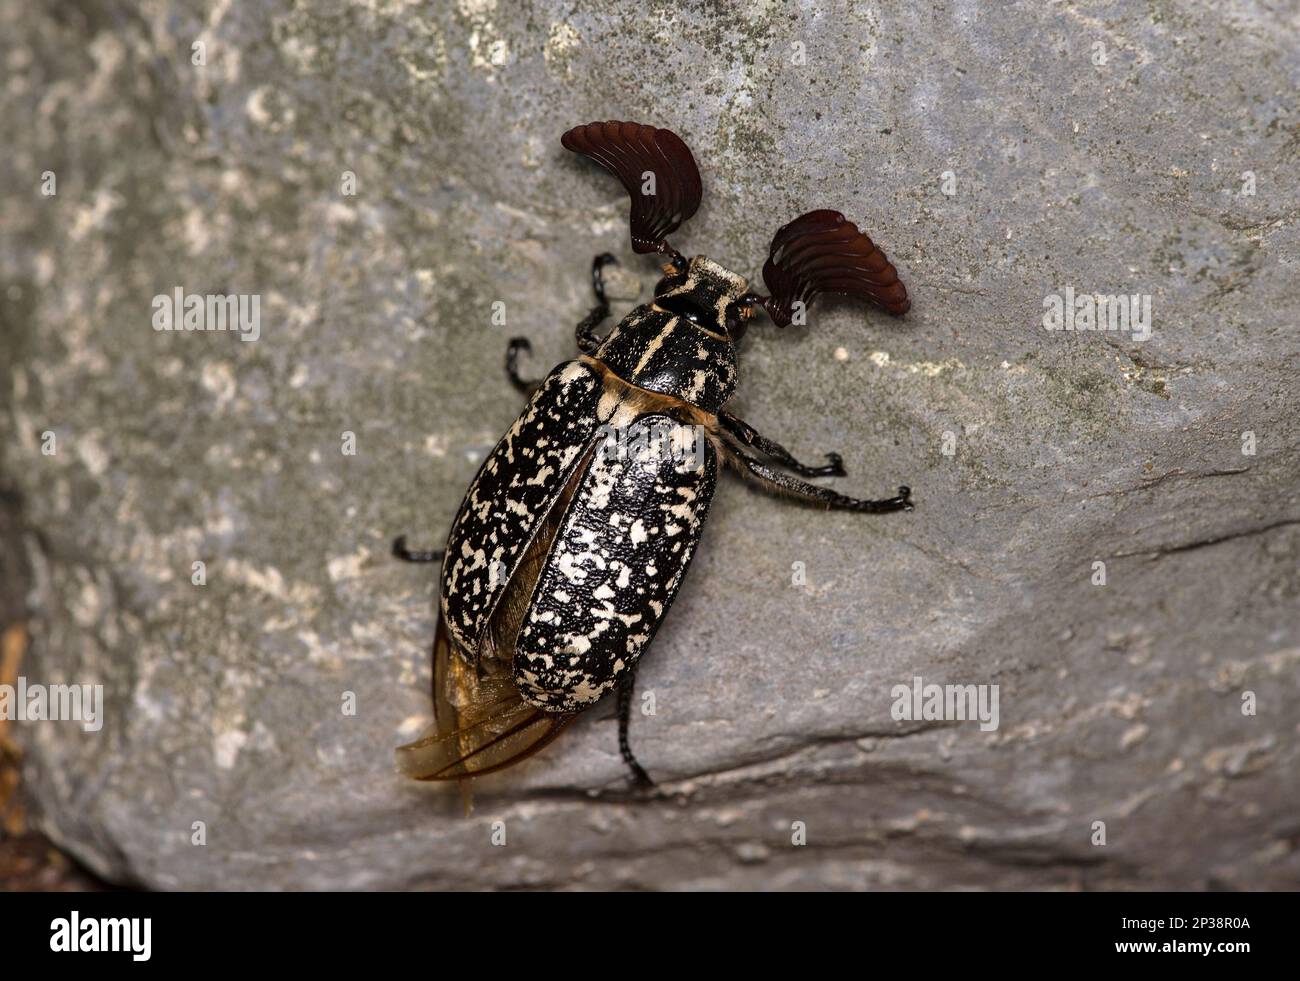 Male Polyphylla fullo beetle belonging to the family Scarabaeidae, Ovronnaz, Valais, Switzerland Stock Photo